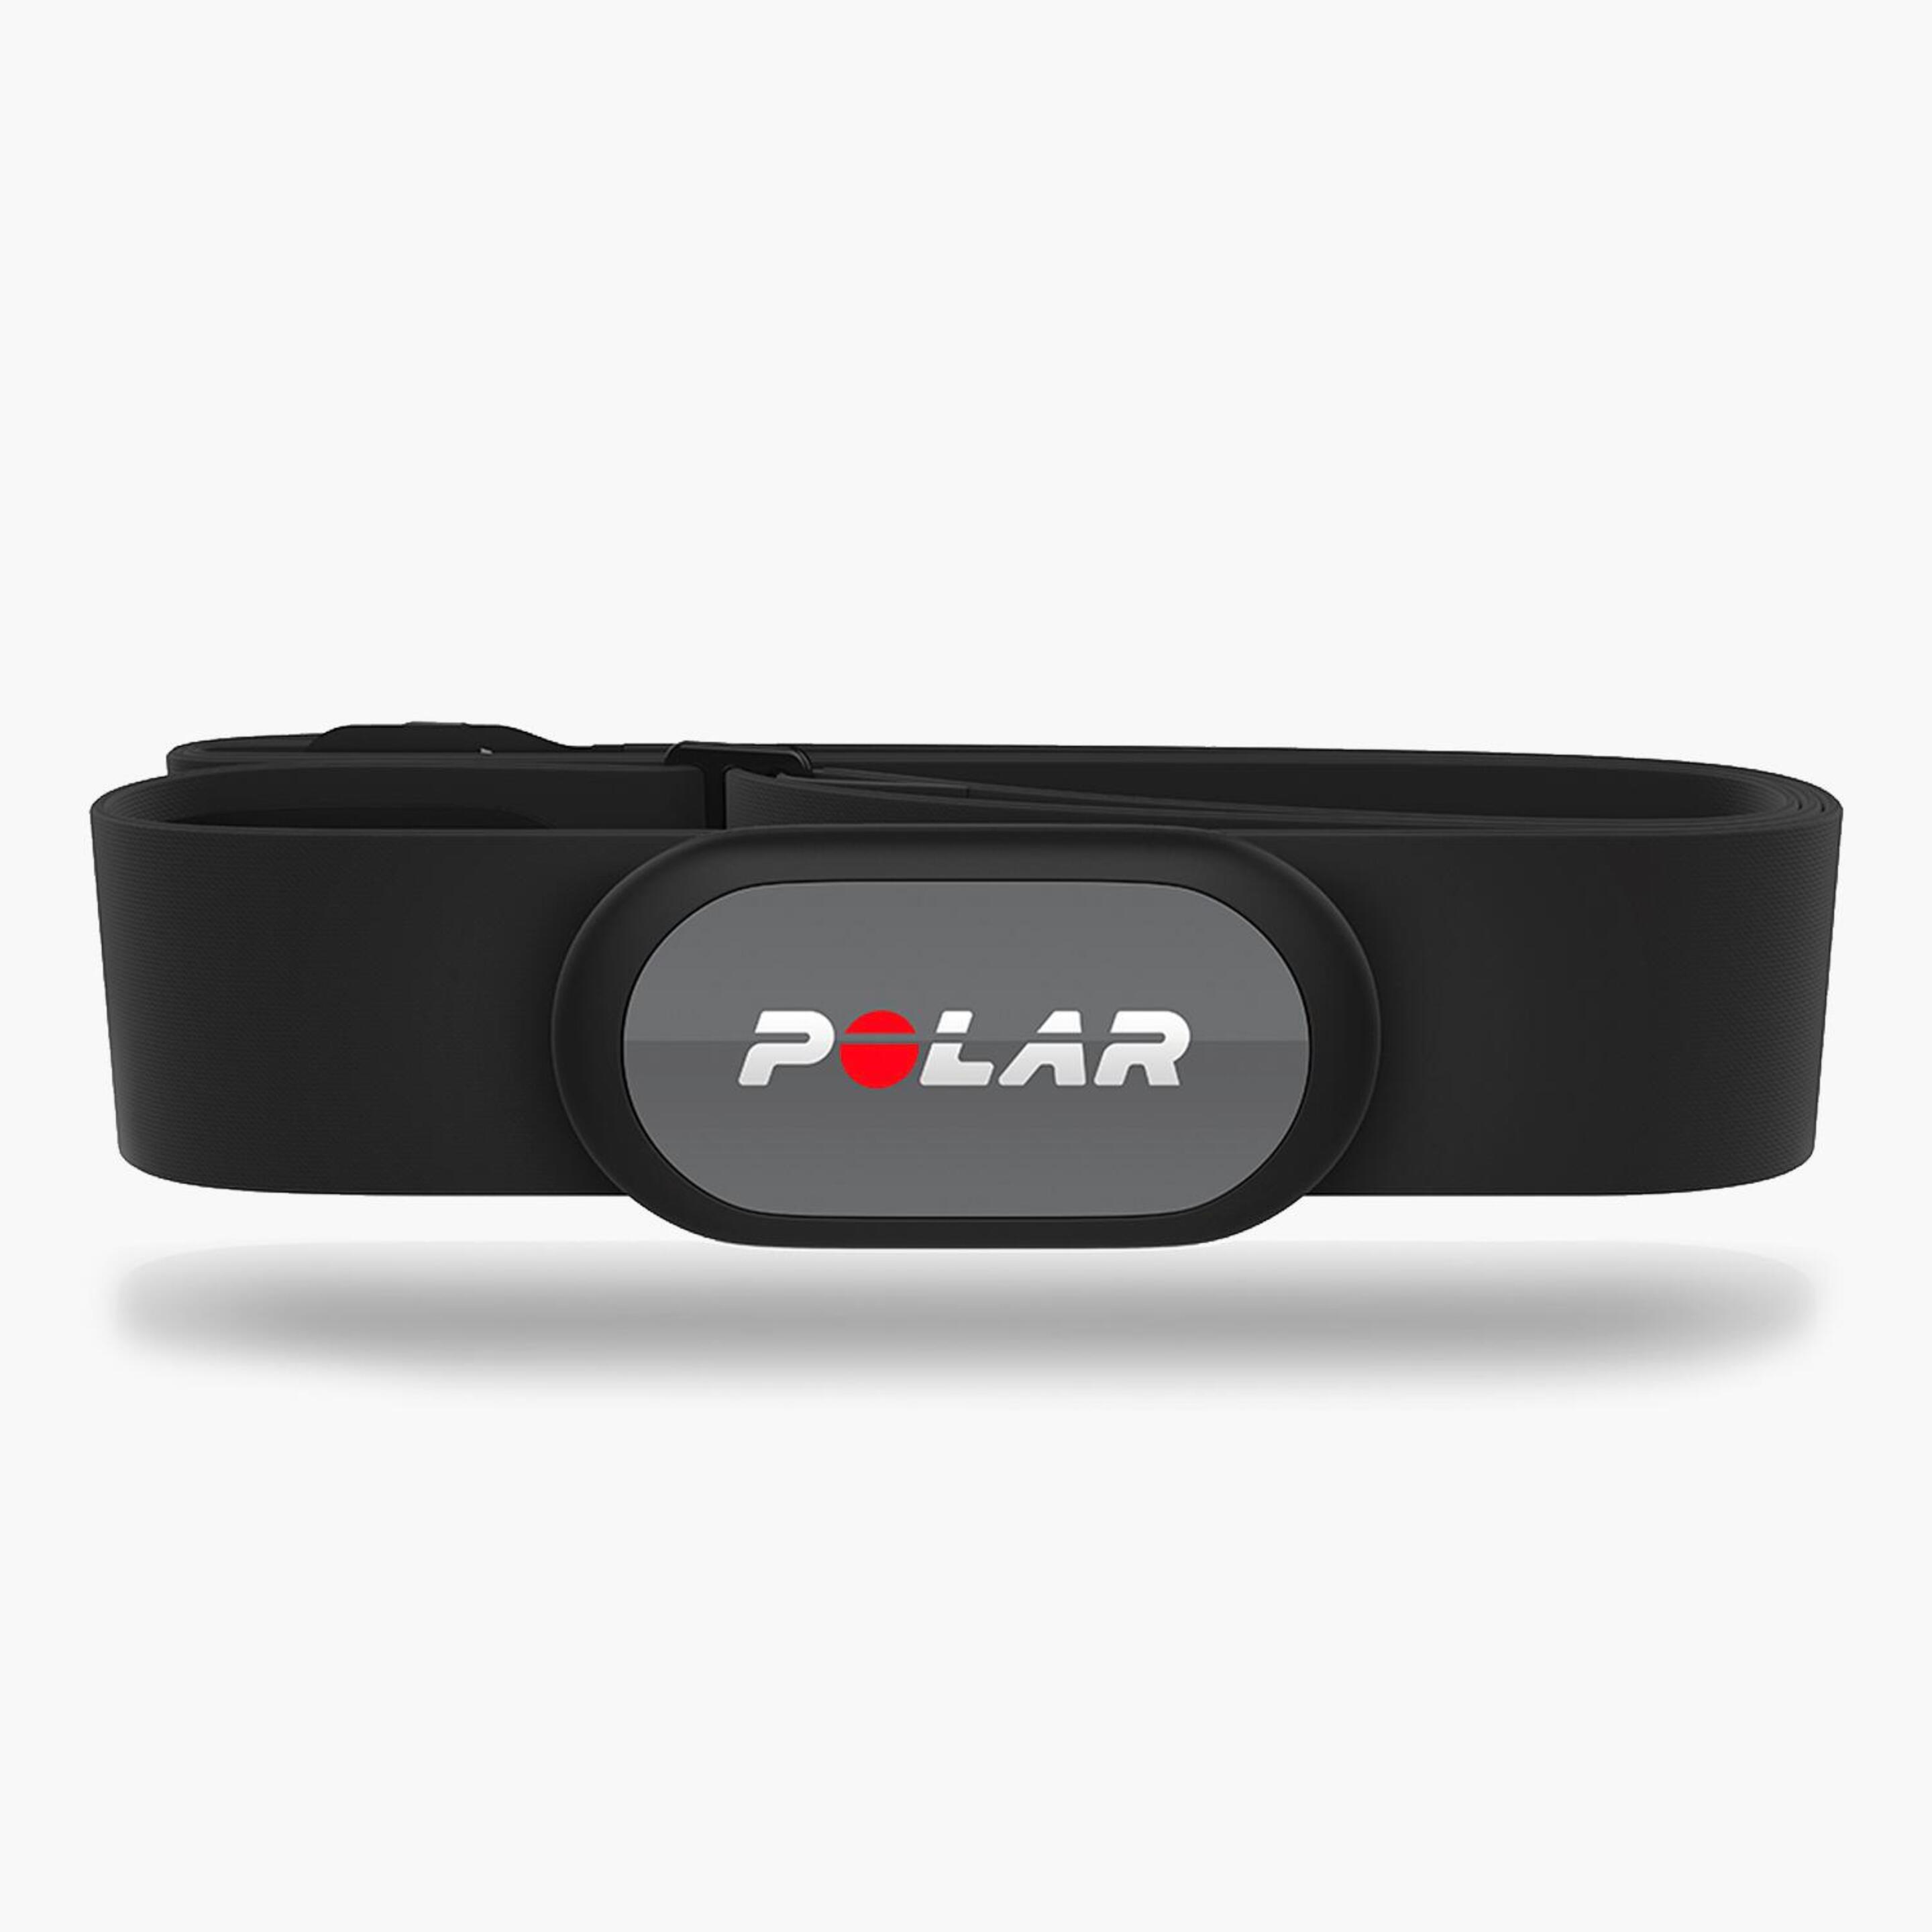 Sensor De Frequência Cardíaca Polar H9 - negro - Pulseira Desportiva